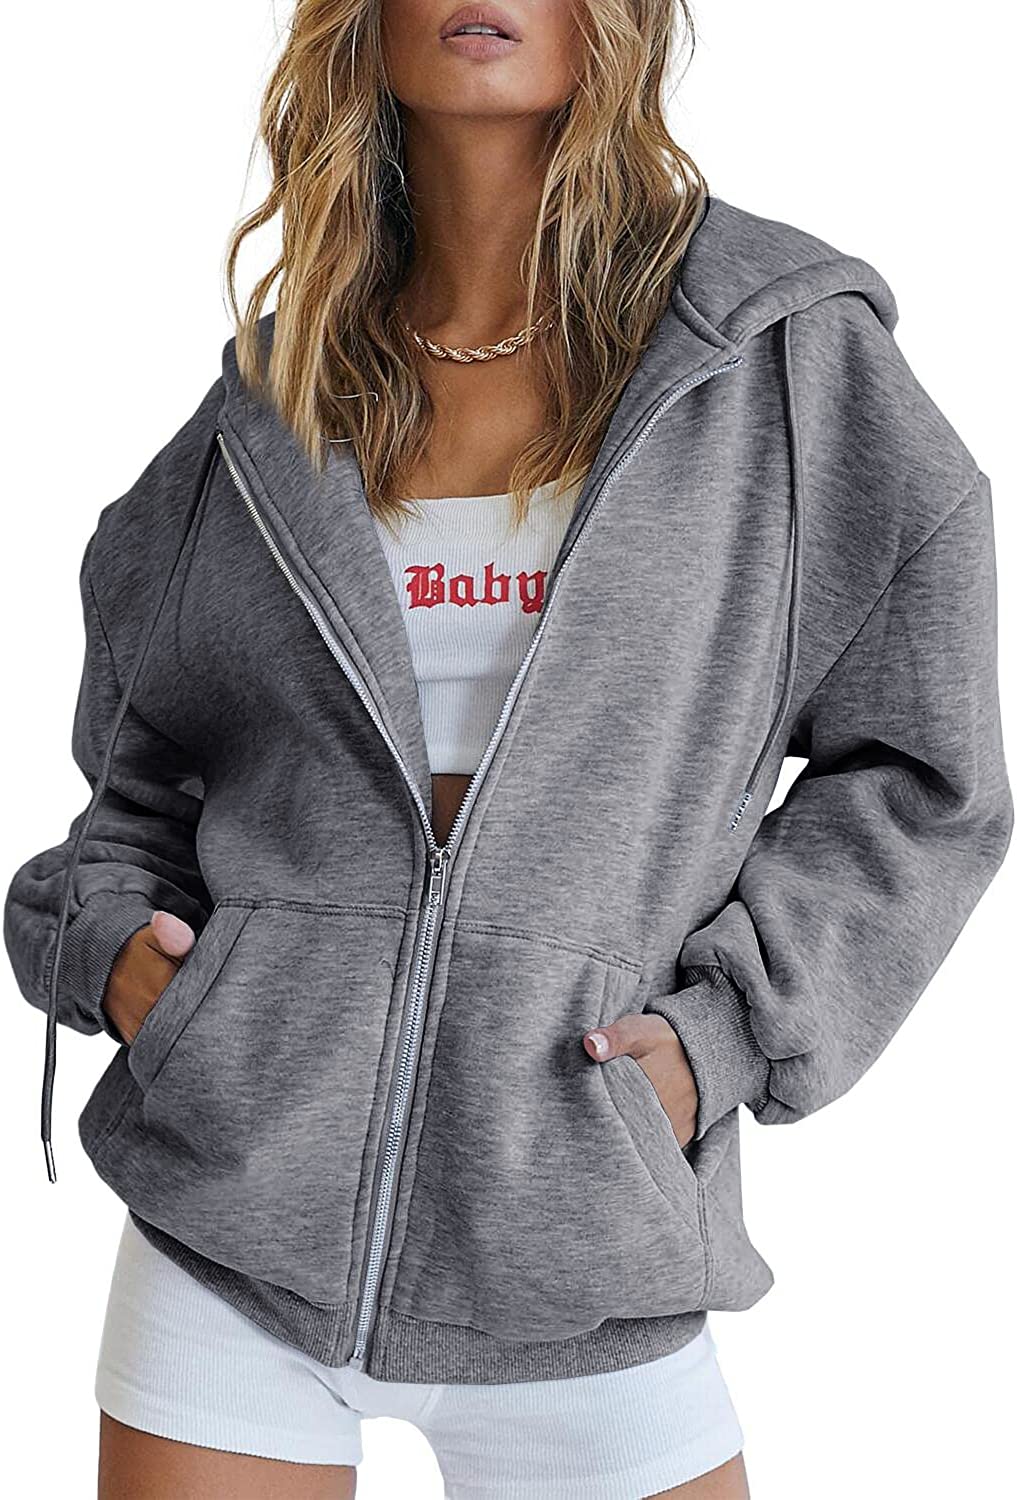 Lady Cute Hoodie Teen Girl Fall Jacket Oversized Sweatshirt Casual